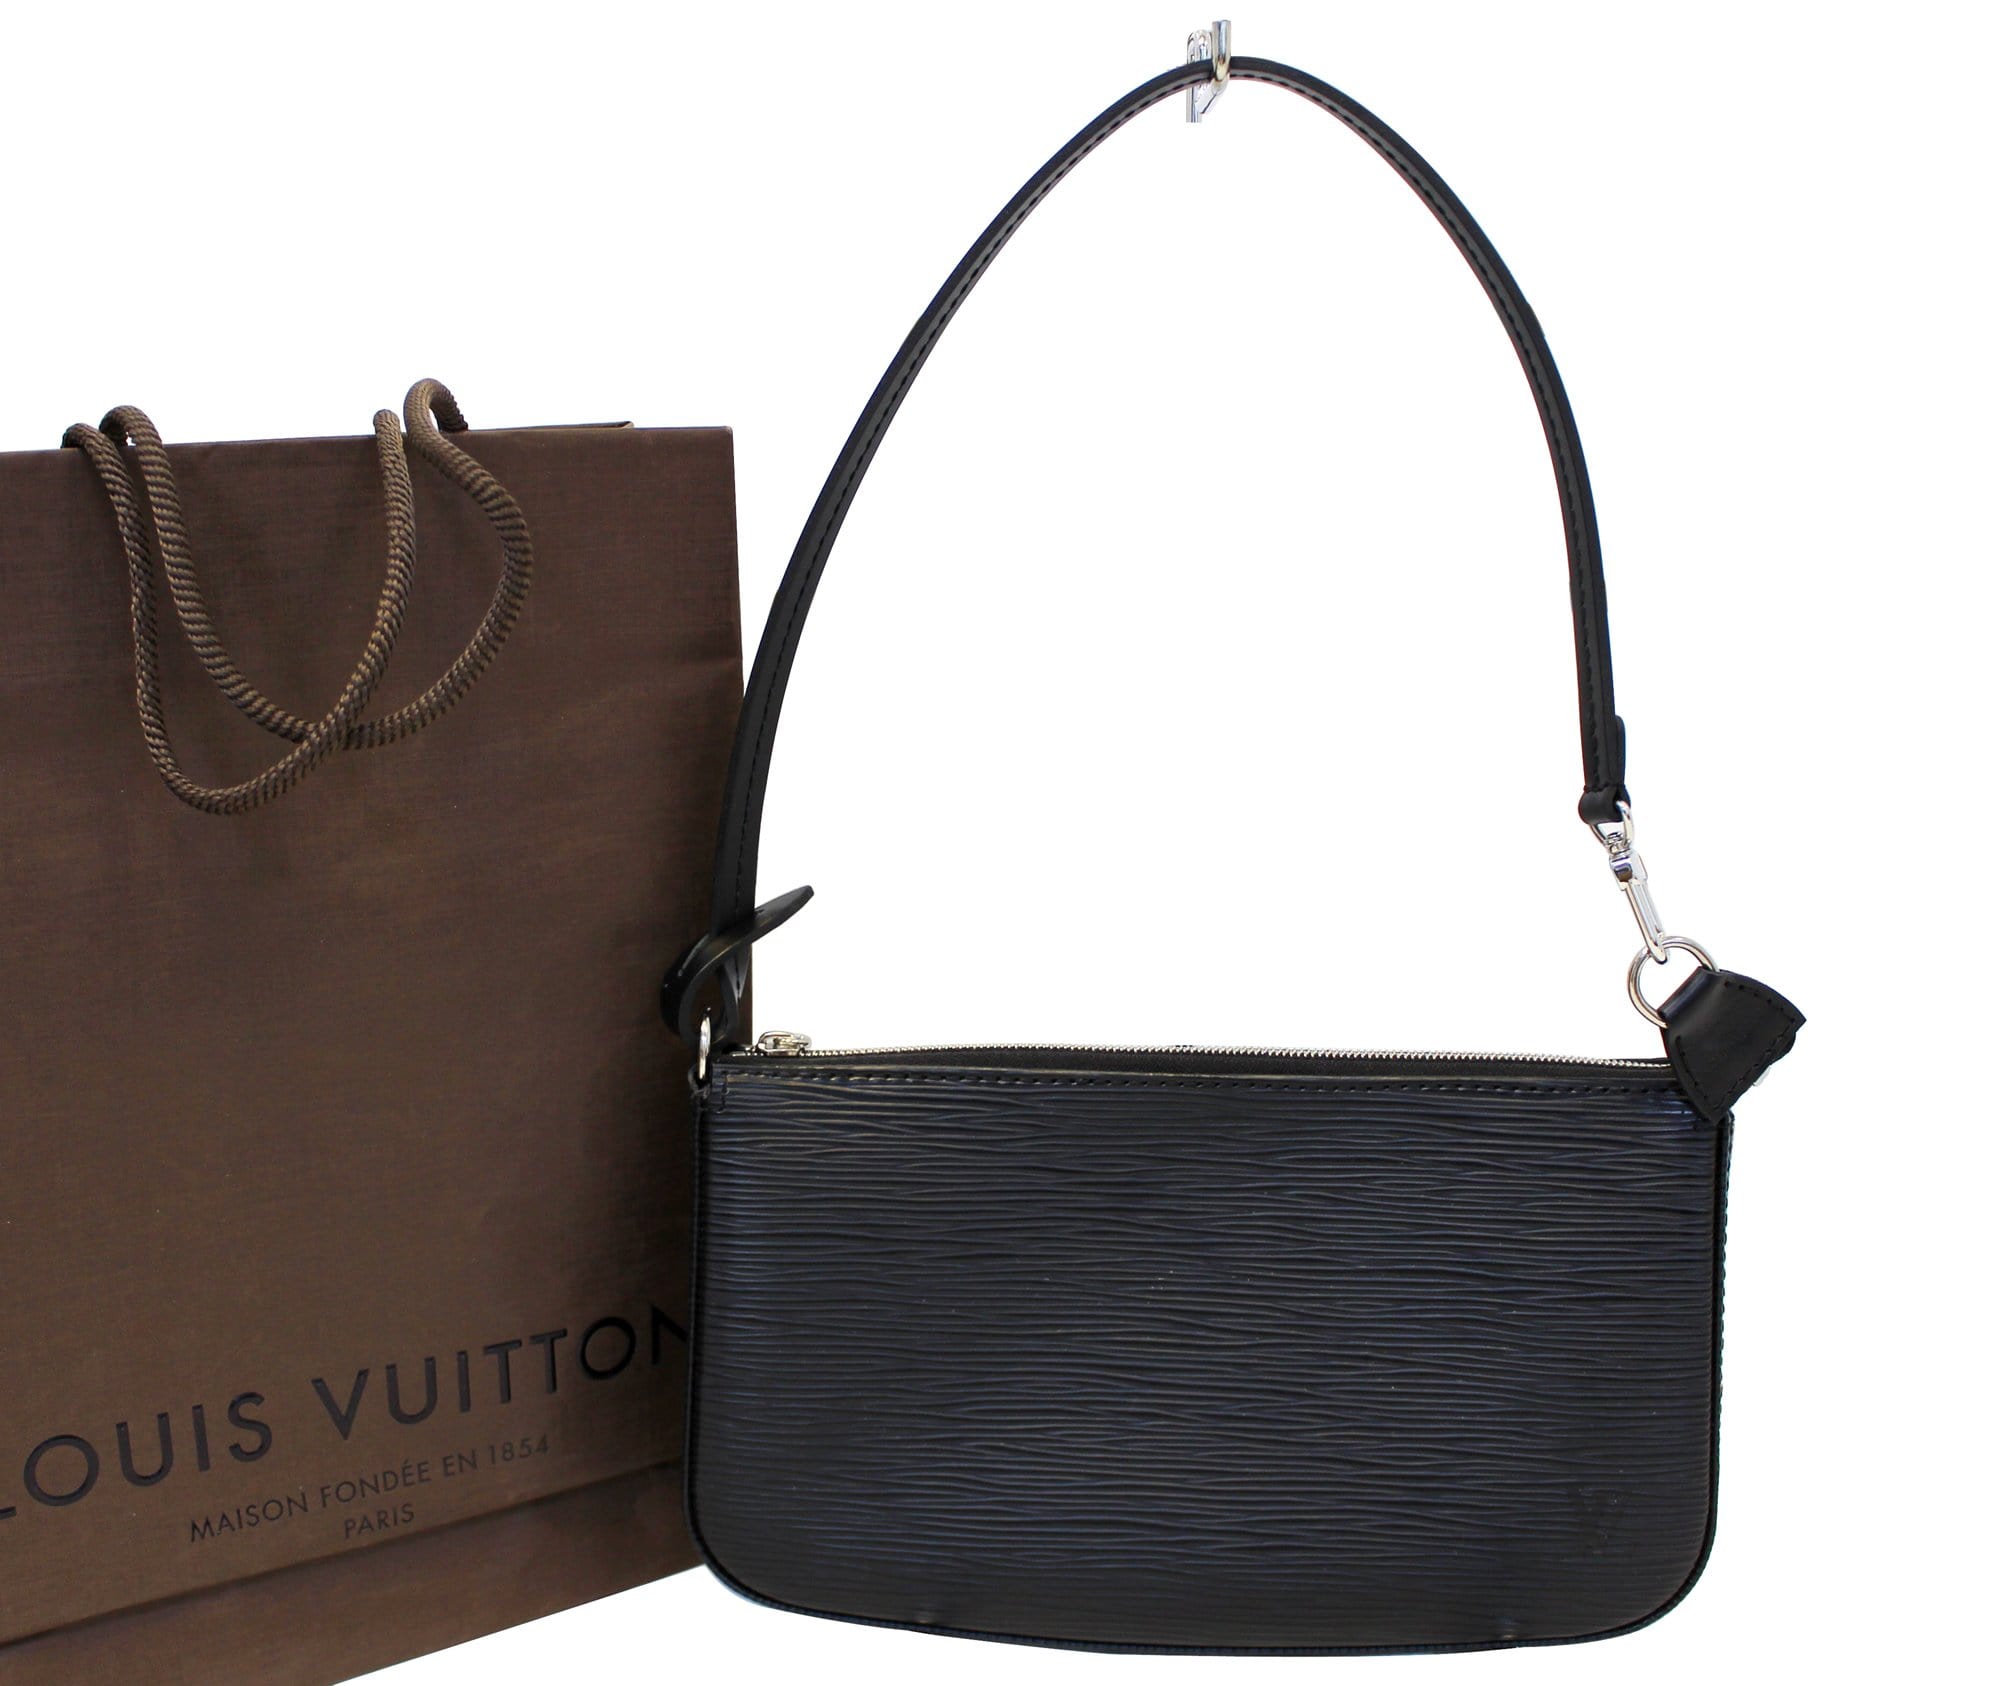 Louis Vuitton Epi Lanyard ID Holder - Black Bag Accessories